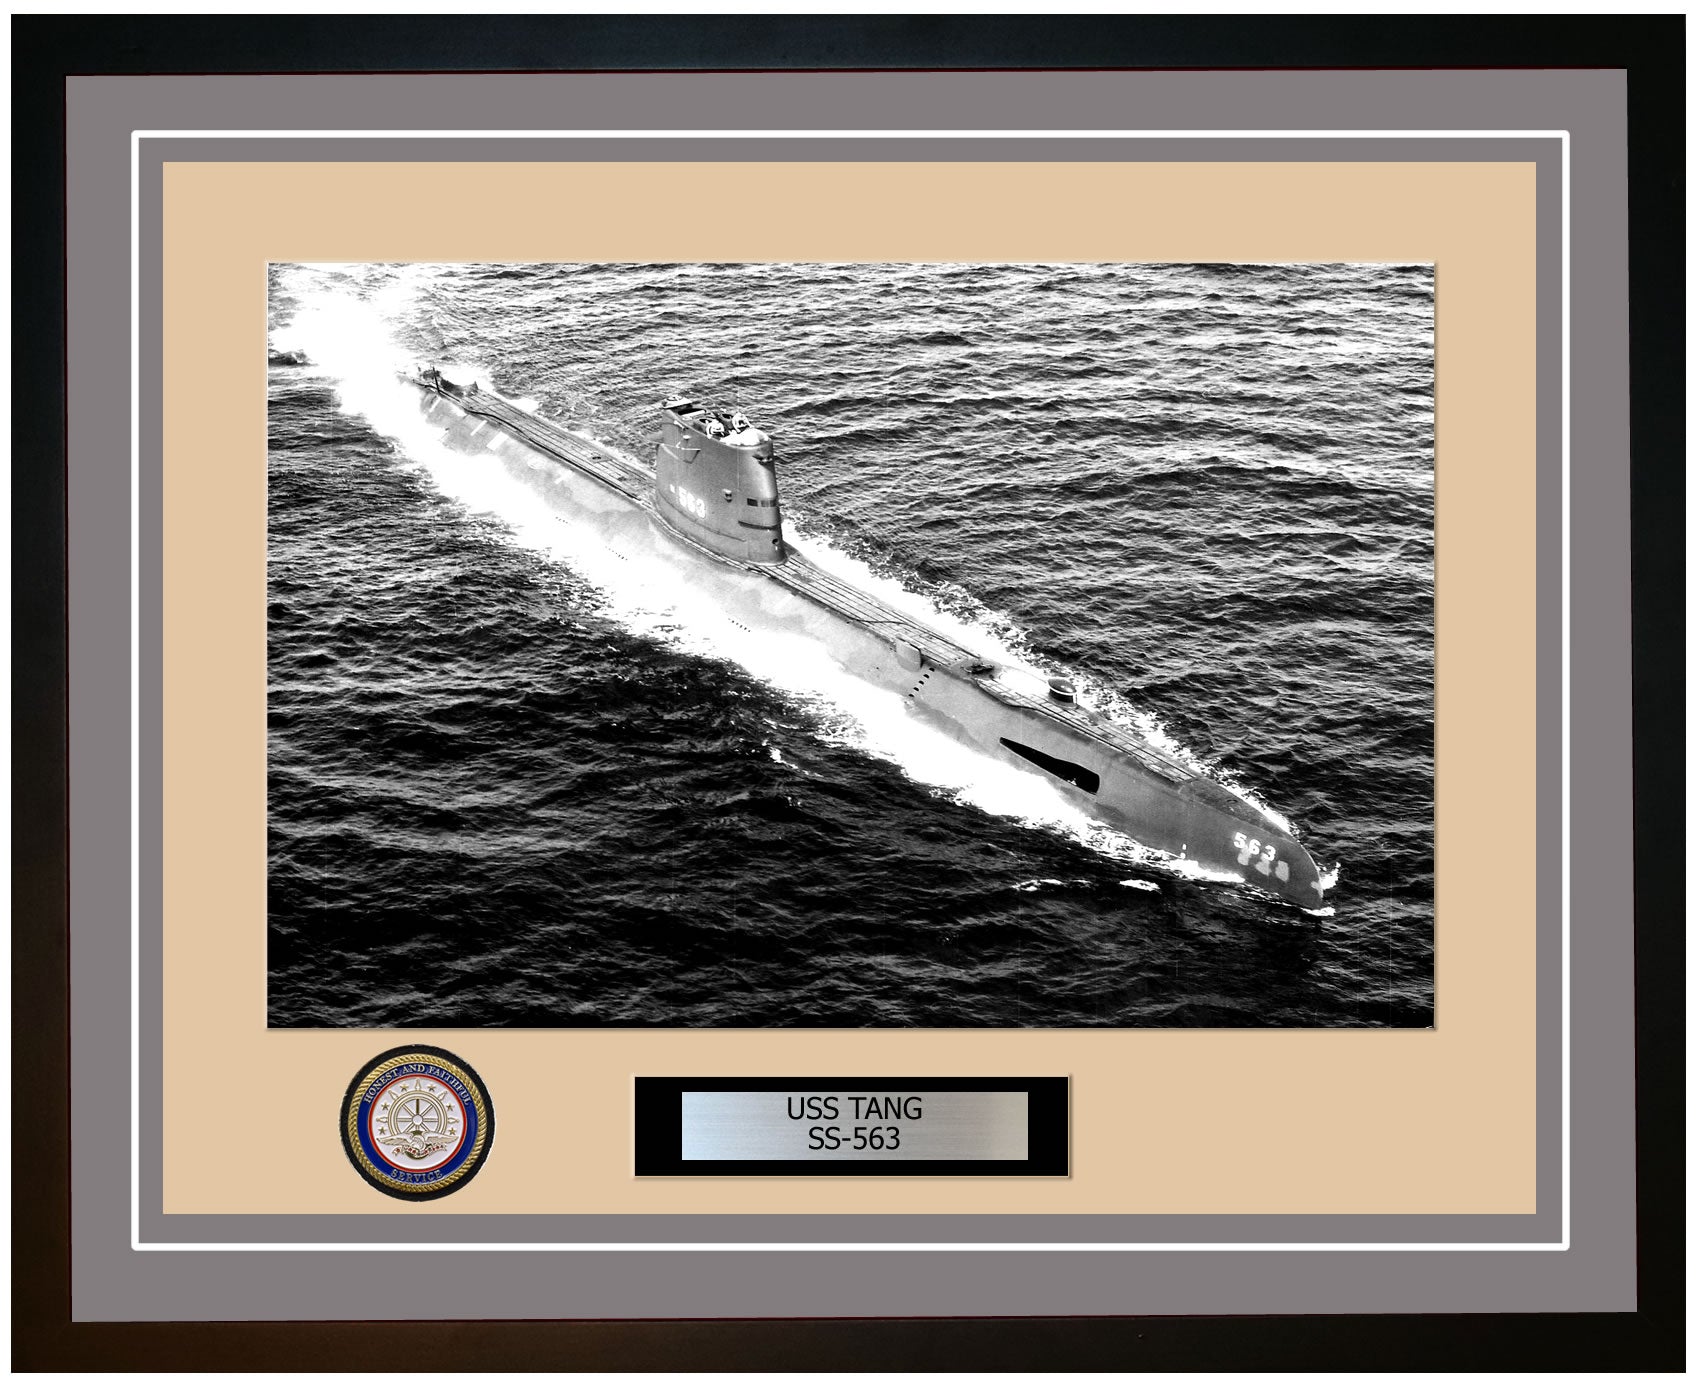 USS Tang SS-563 Framed Navy Ship Photo Grey